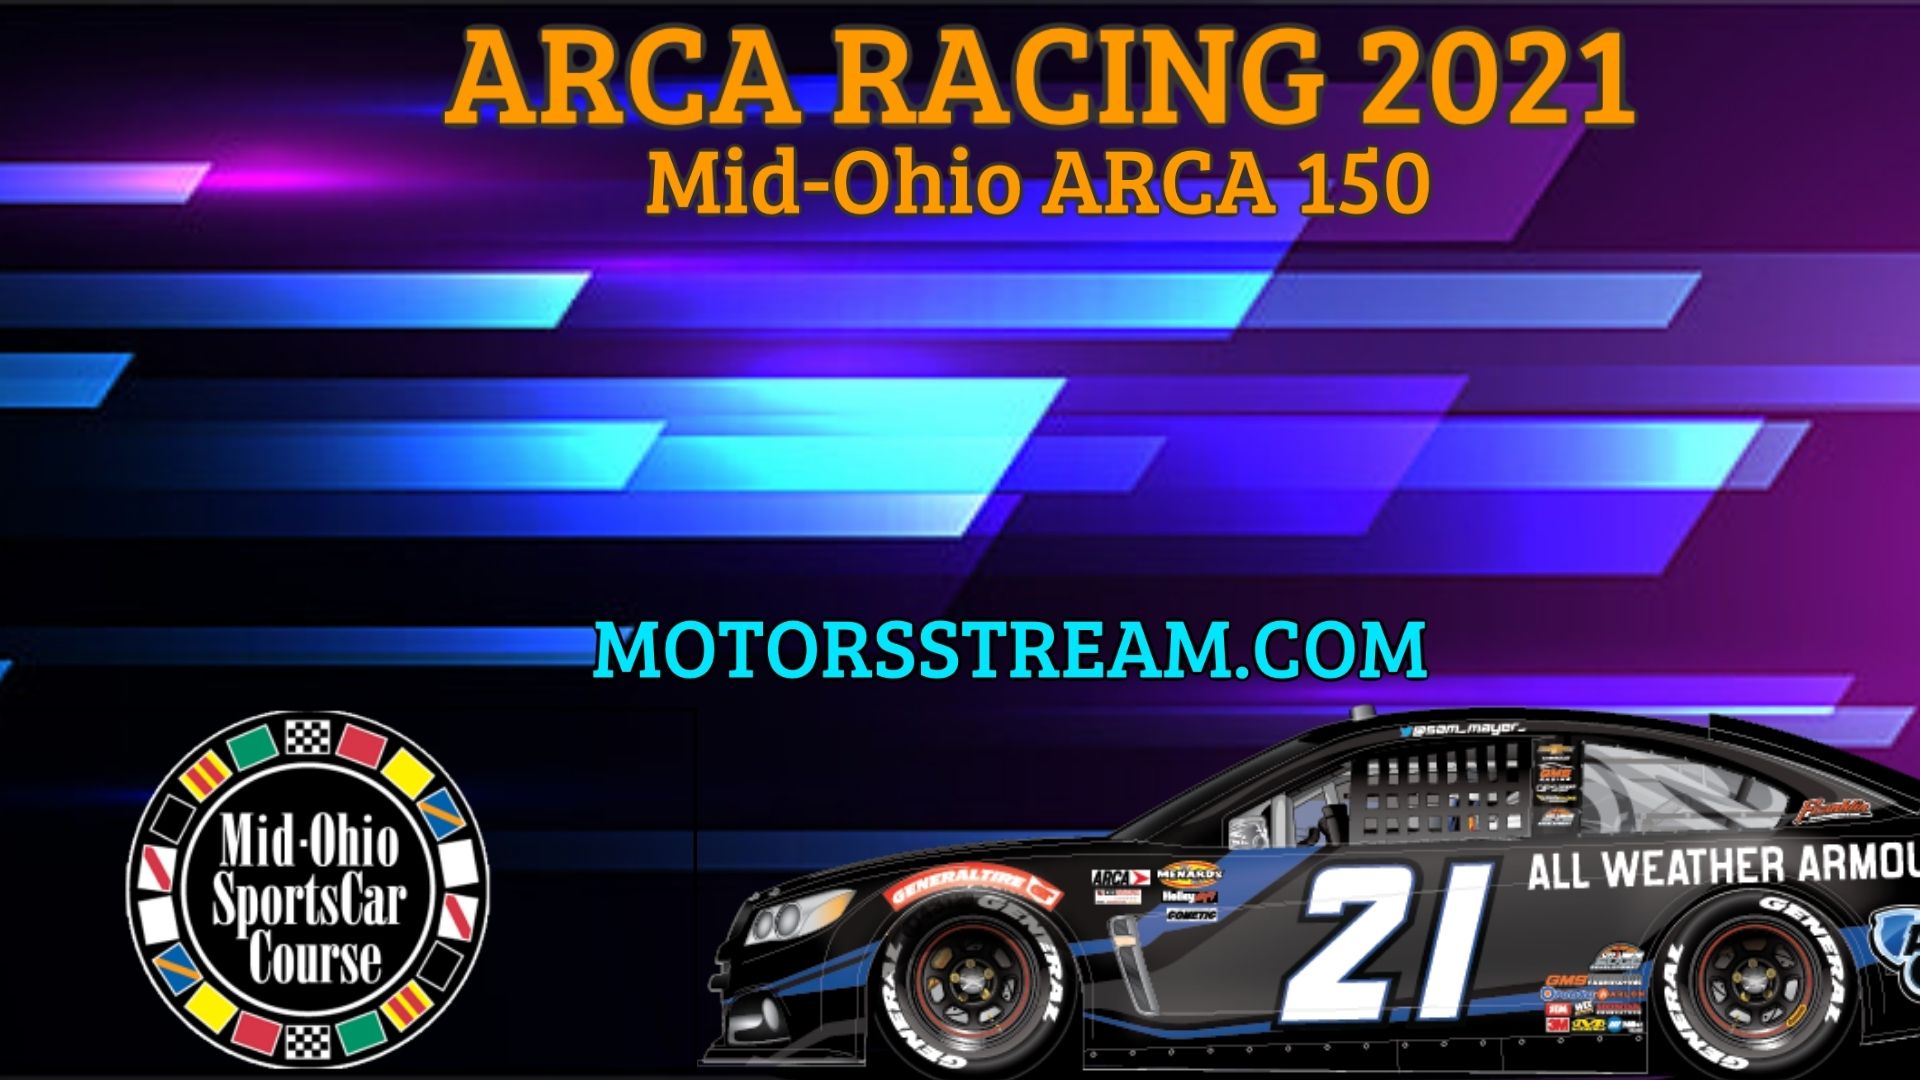 ARCA Racing 2021 Schedule, Live Stream & Full Race Replay